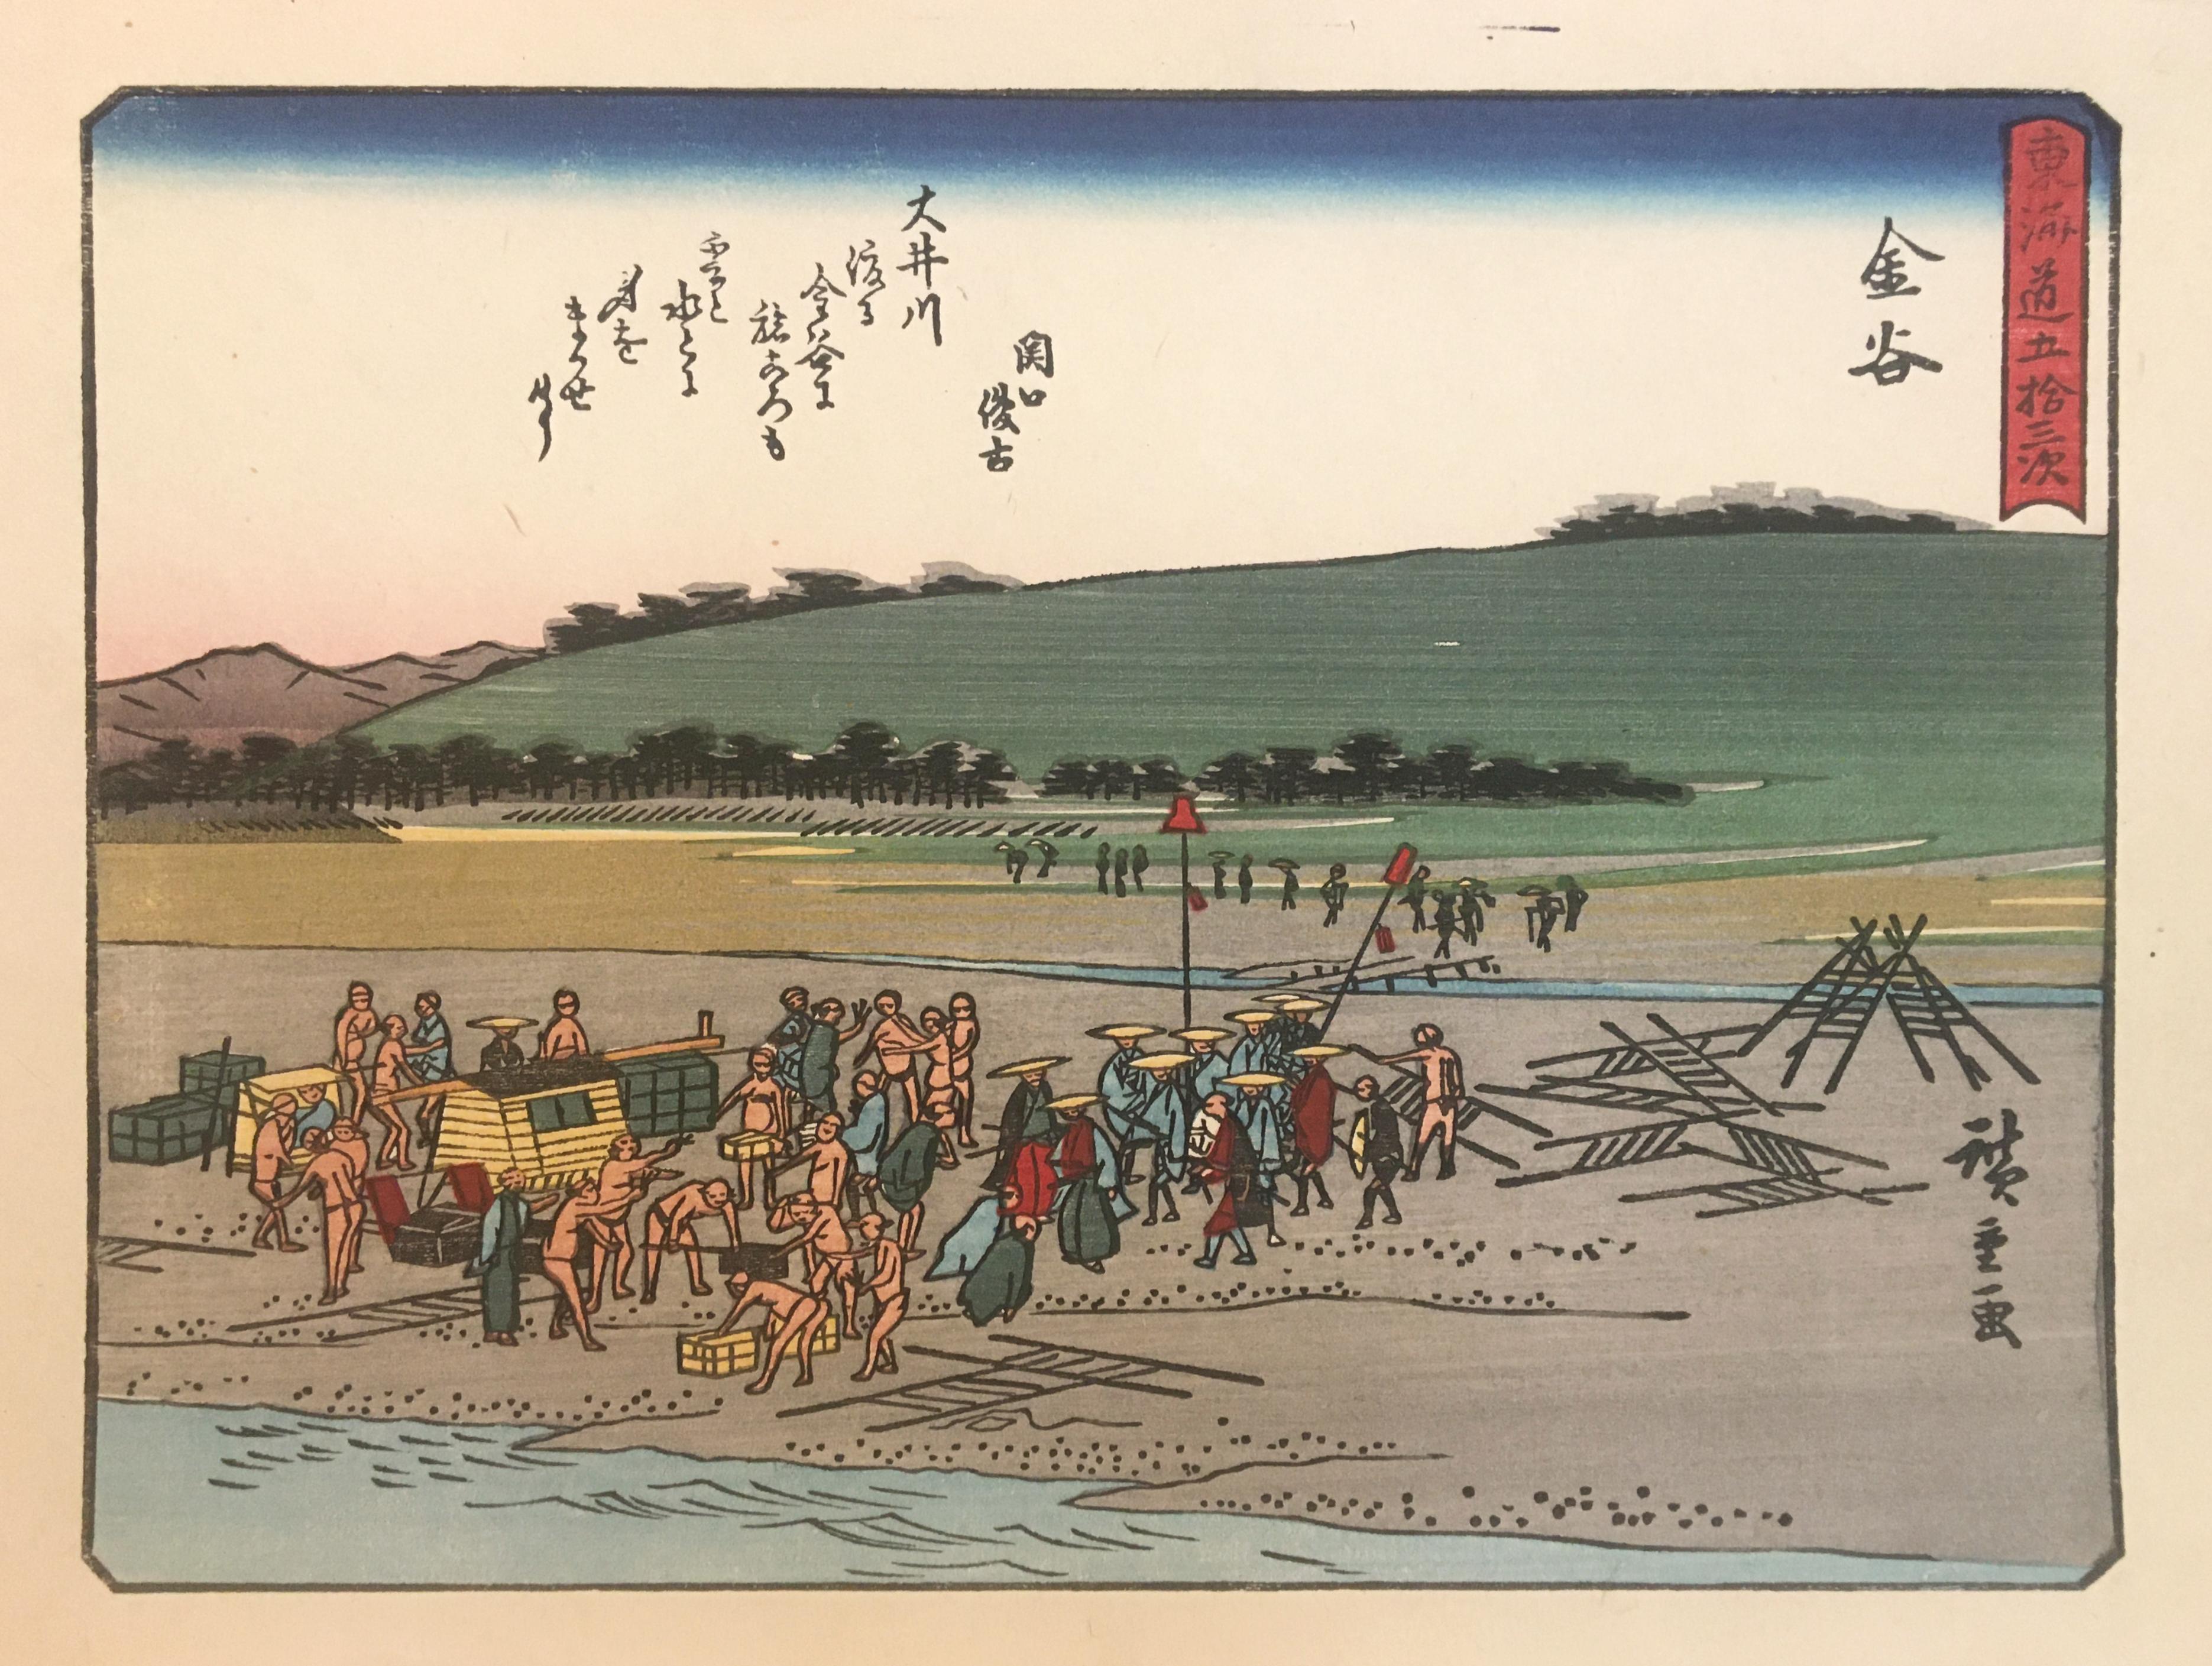 'Travelers at Kanaya', After Utagawa Hiroshige, Ukiyo-E Woodblock, Tokaido, Edo